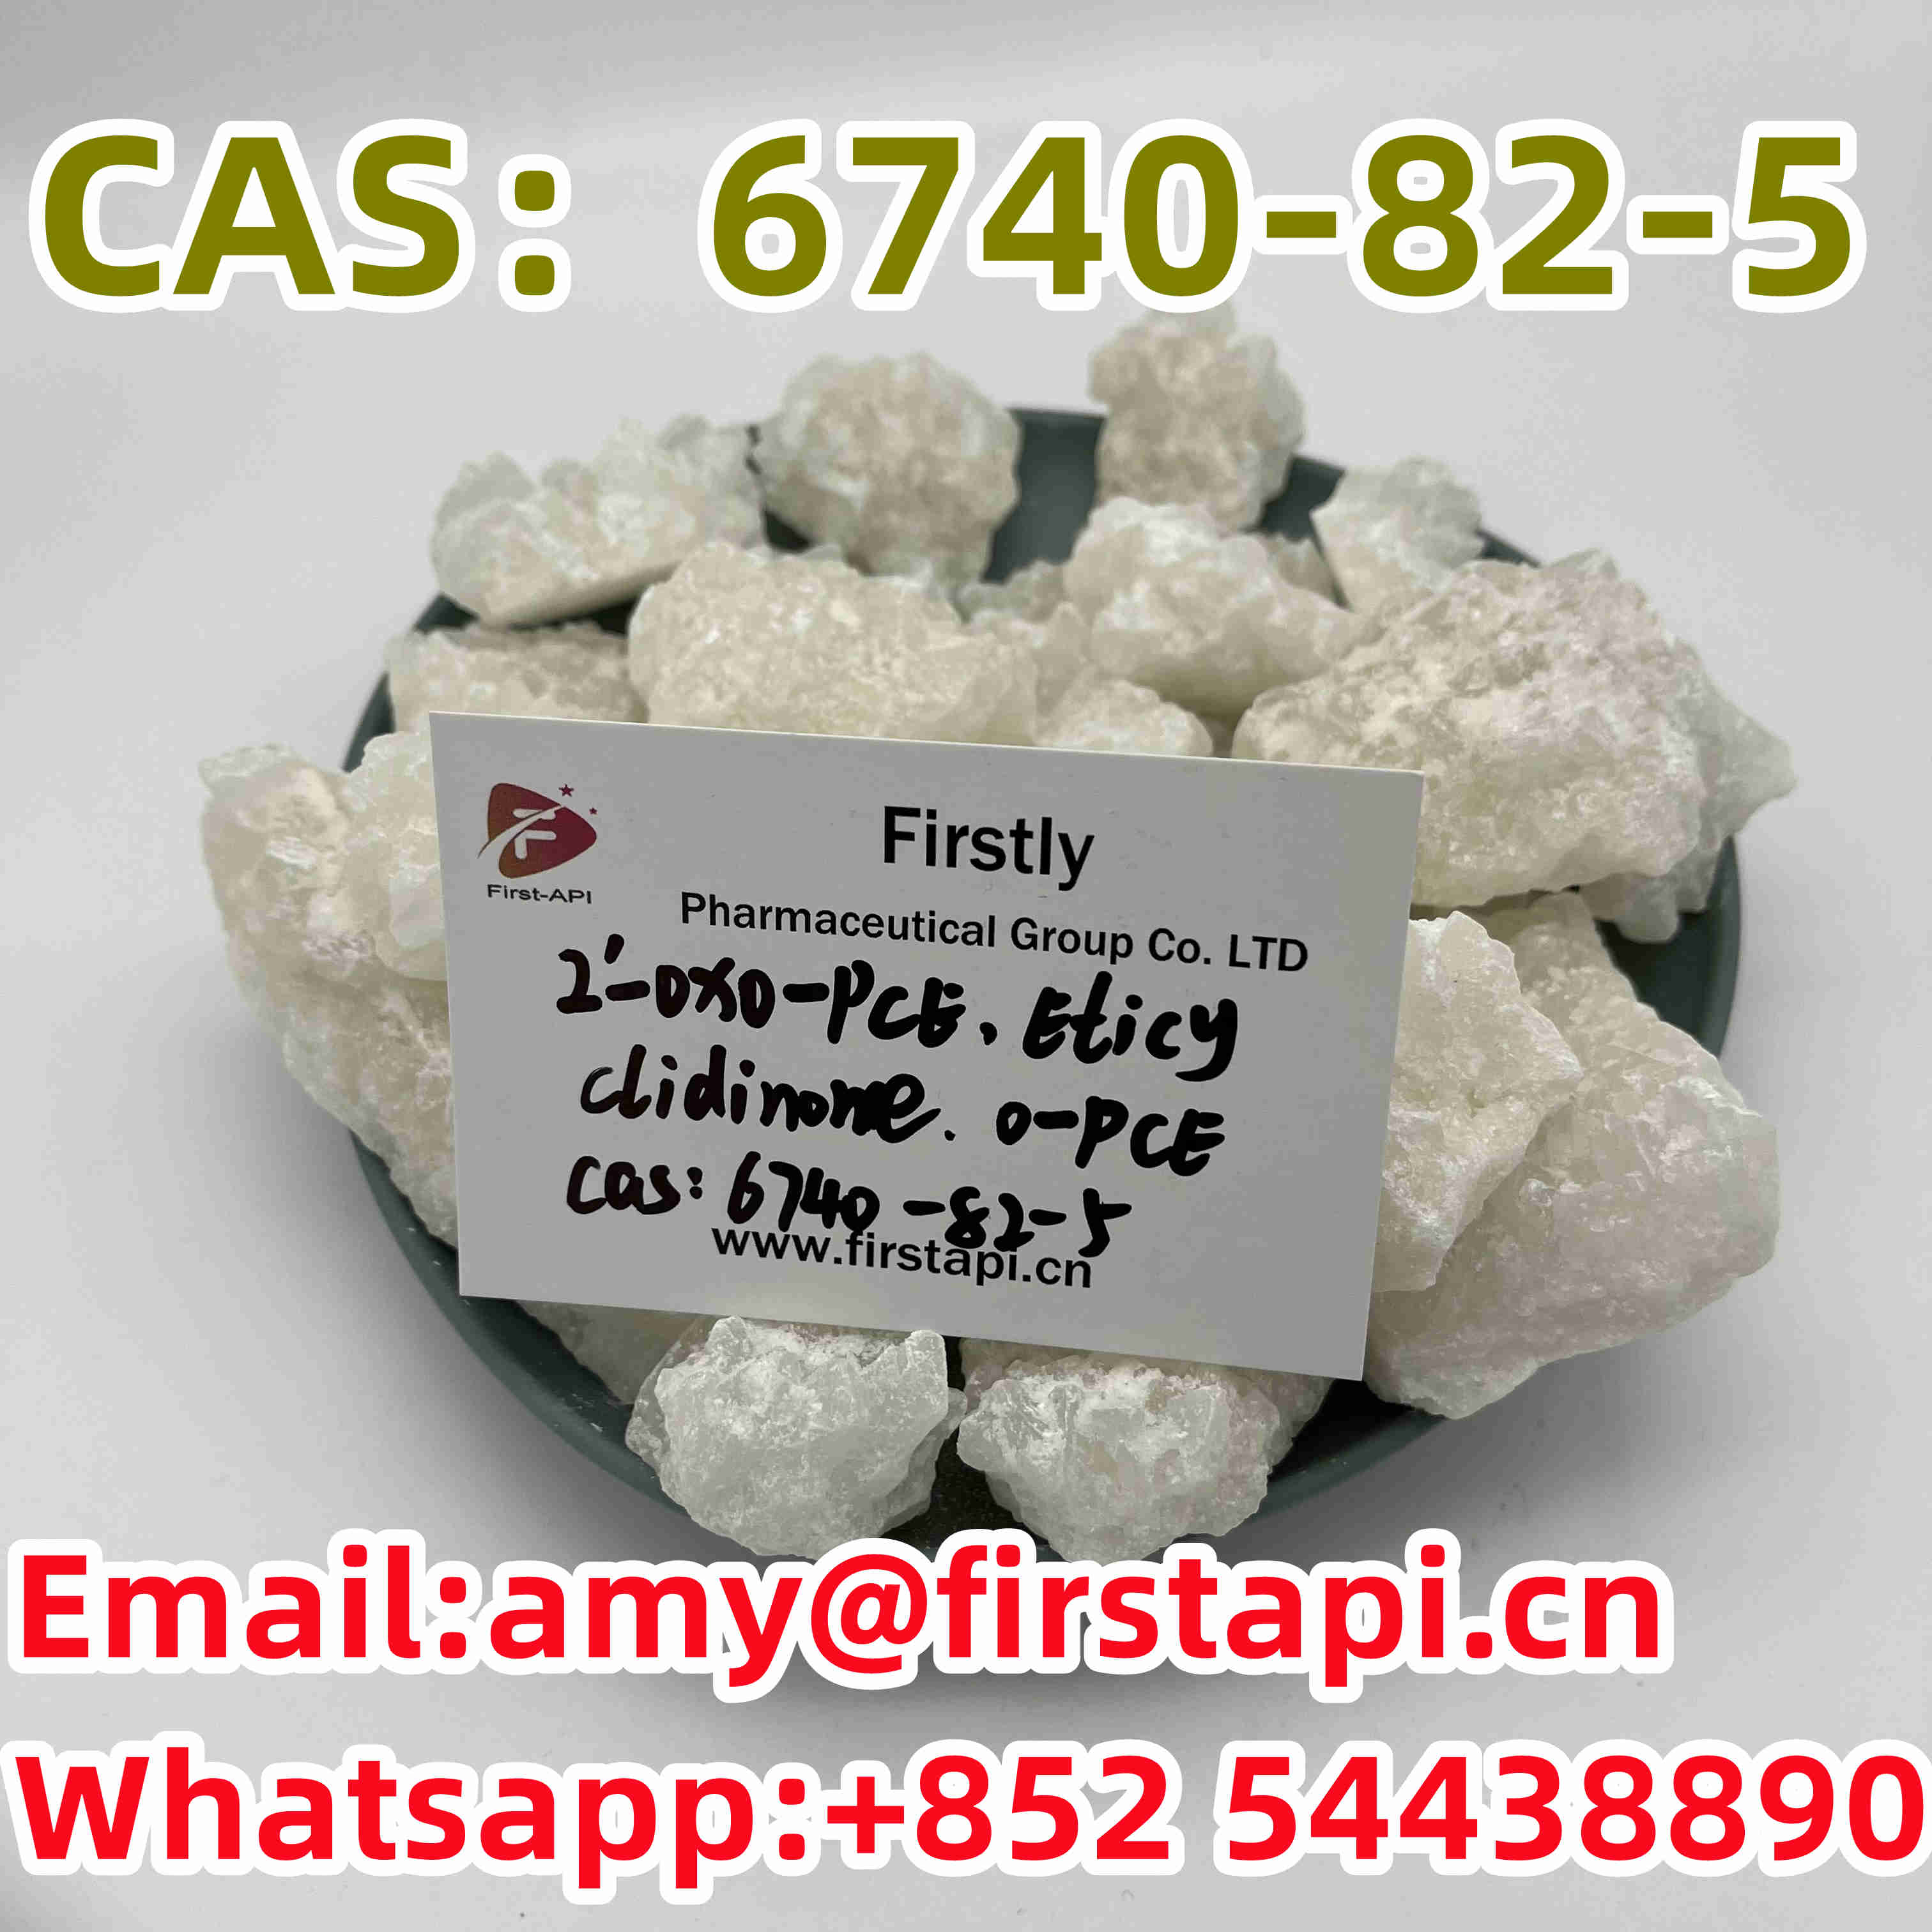 CAS No.:6740-82-5,Cyclohexanone,Whatsapp:+852 54438890,made in china - photo